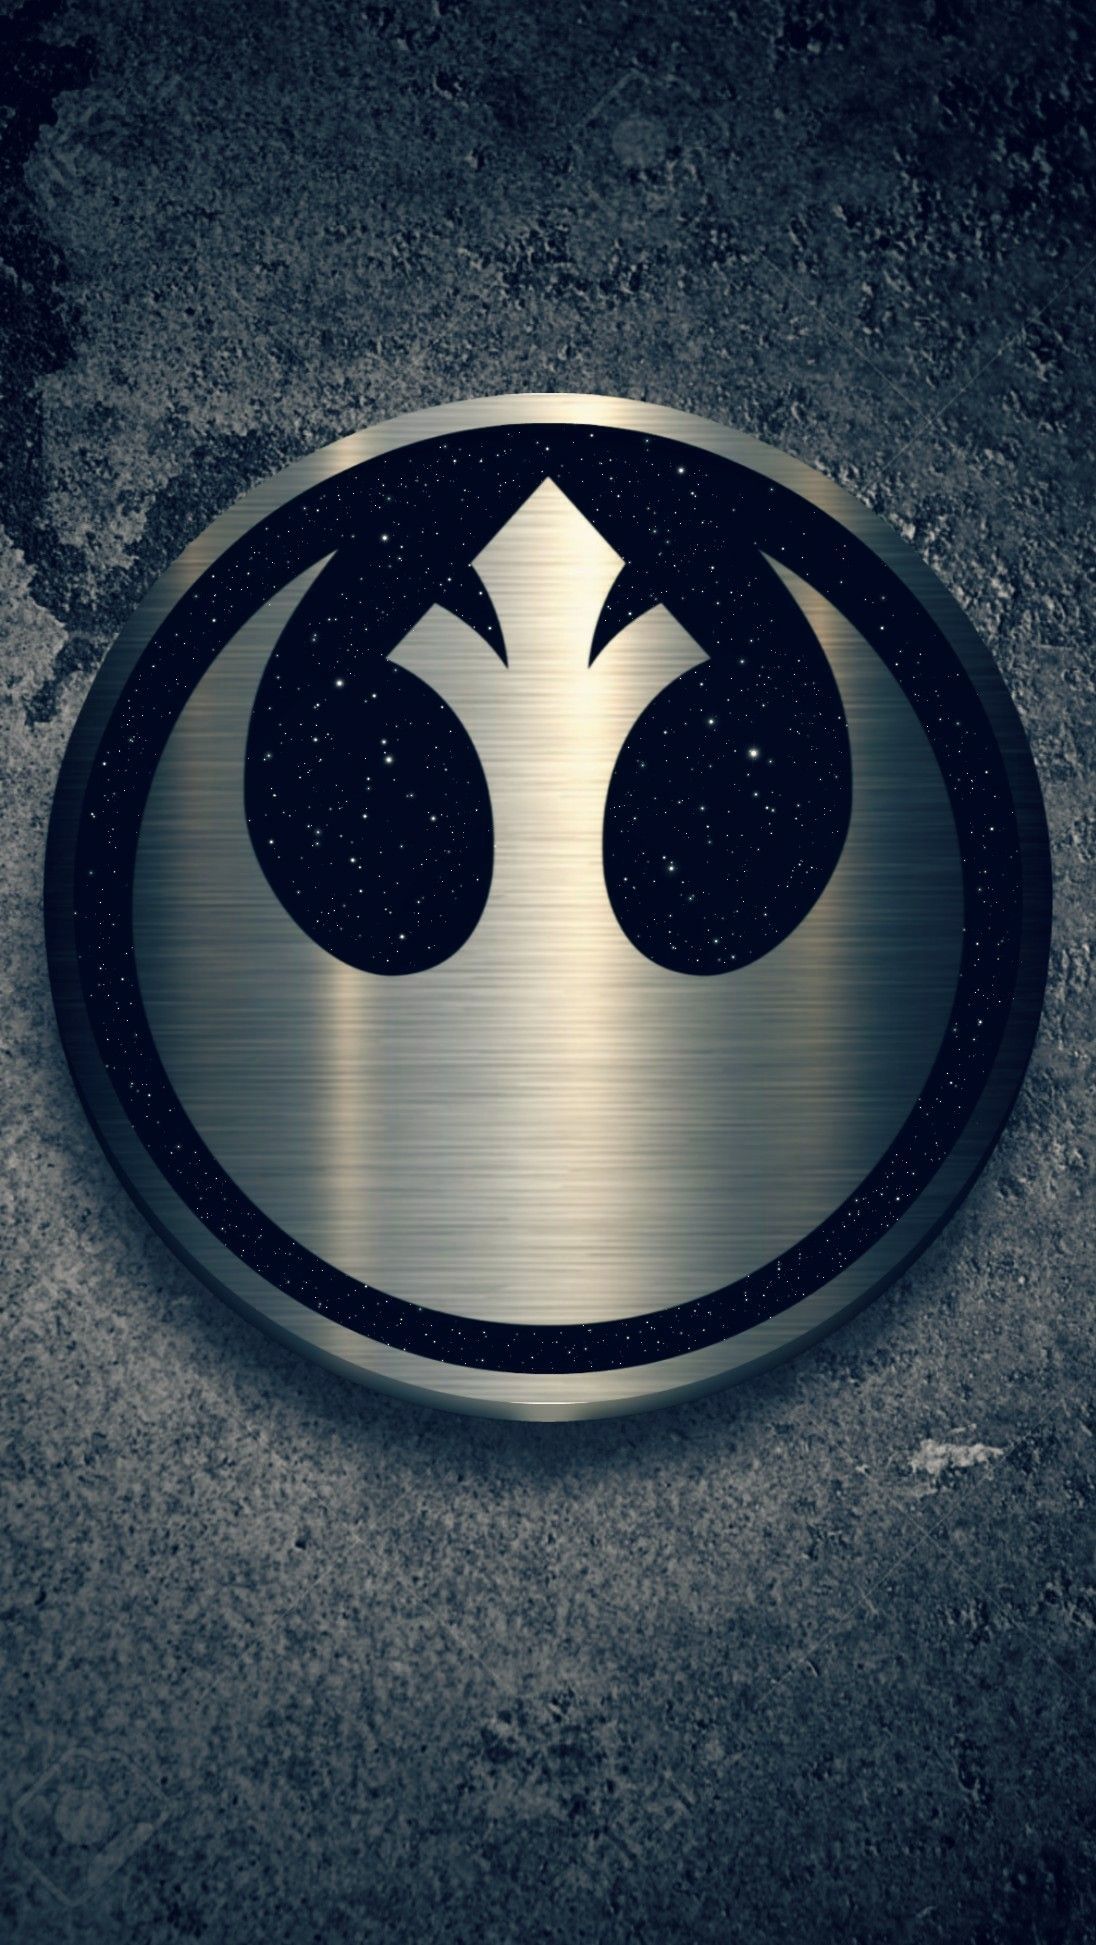 Star Wars Rebels Logo Wallpaper. Star wars background, Star wars image, Star wars wallpaper